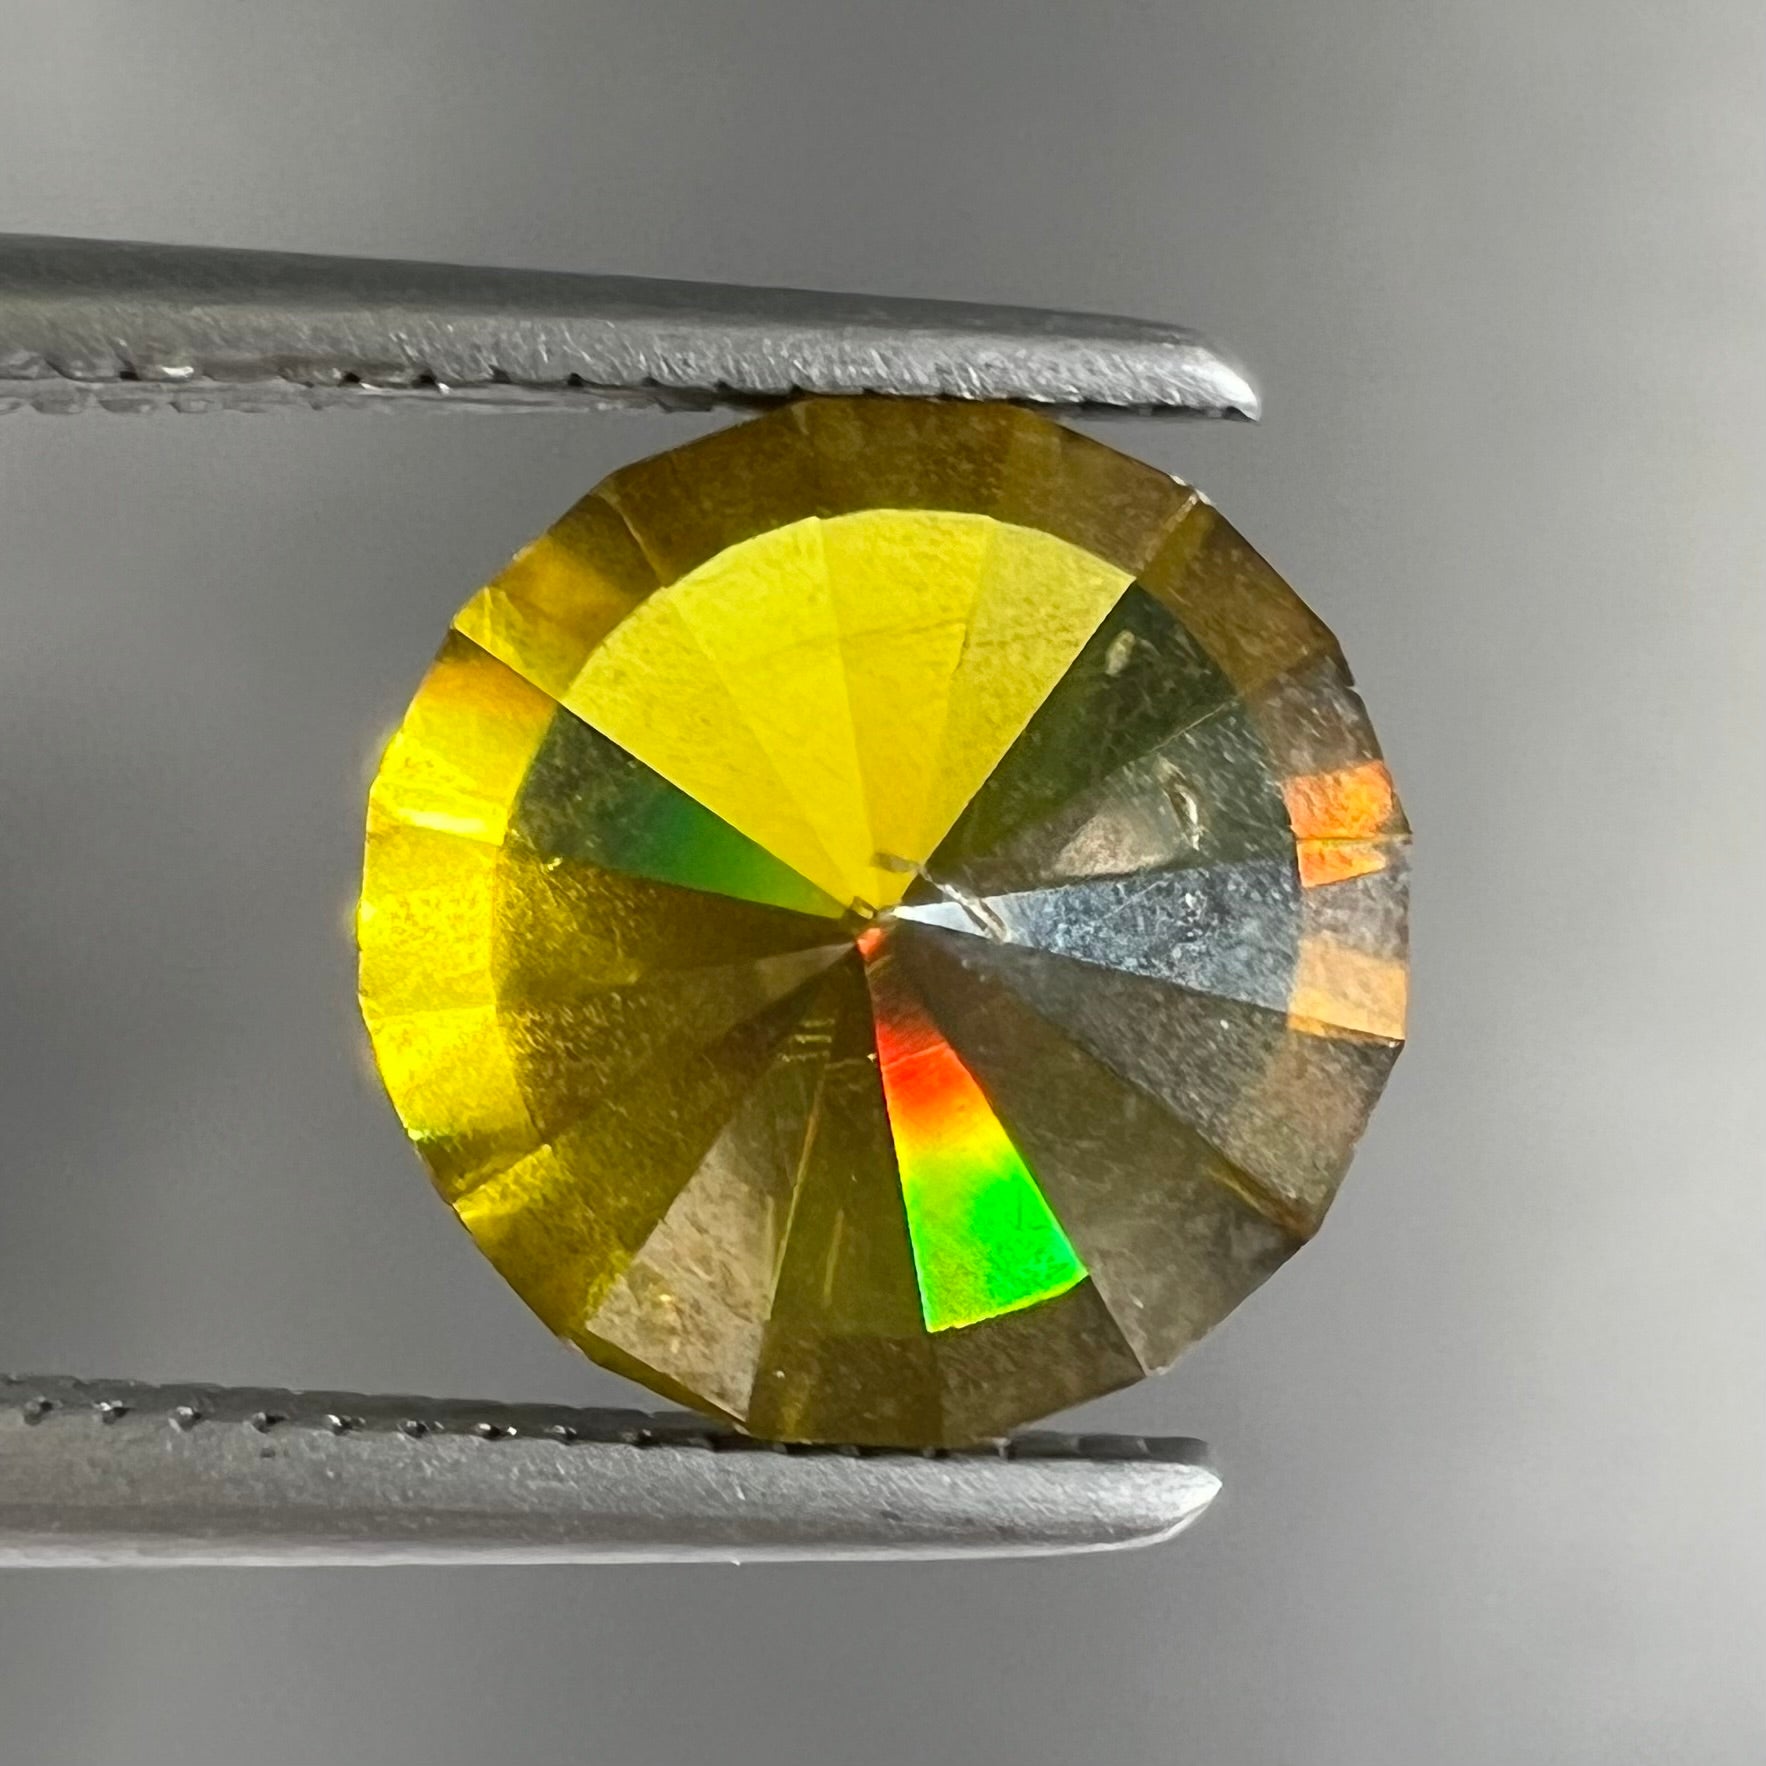 A loose, modified round brilliant cut sphalerite gemstone.